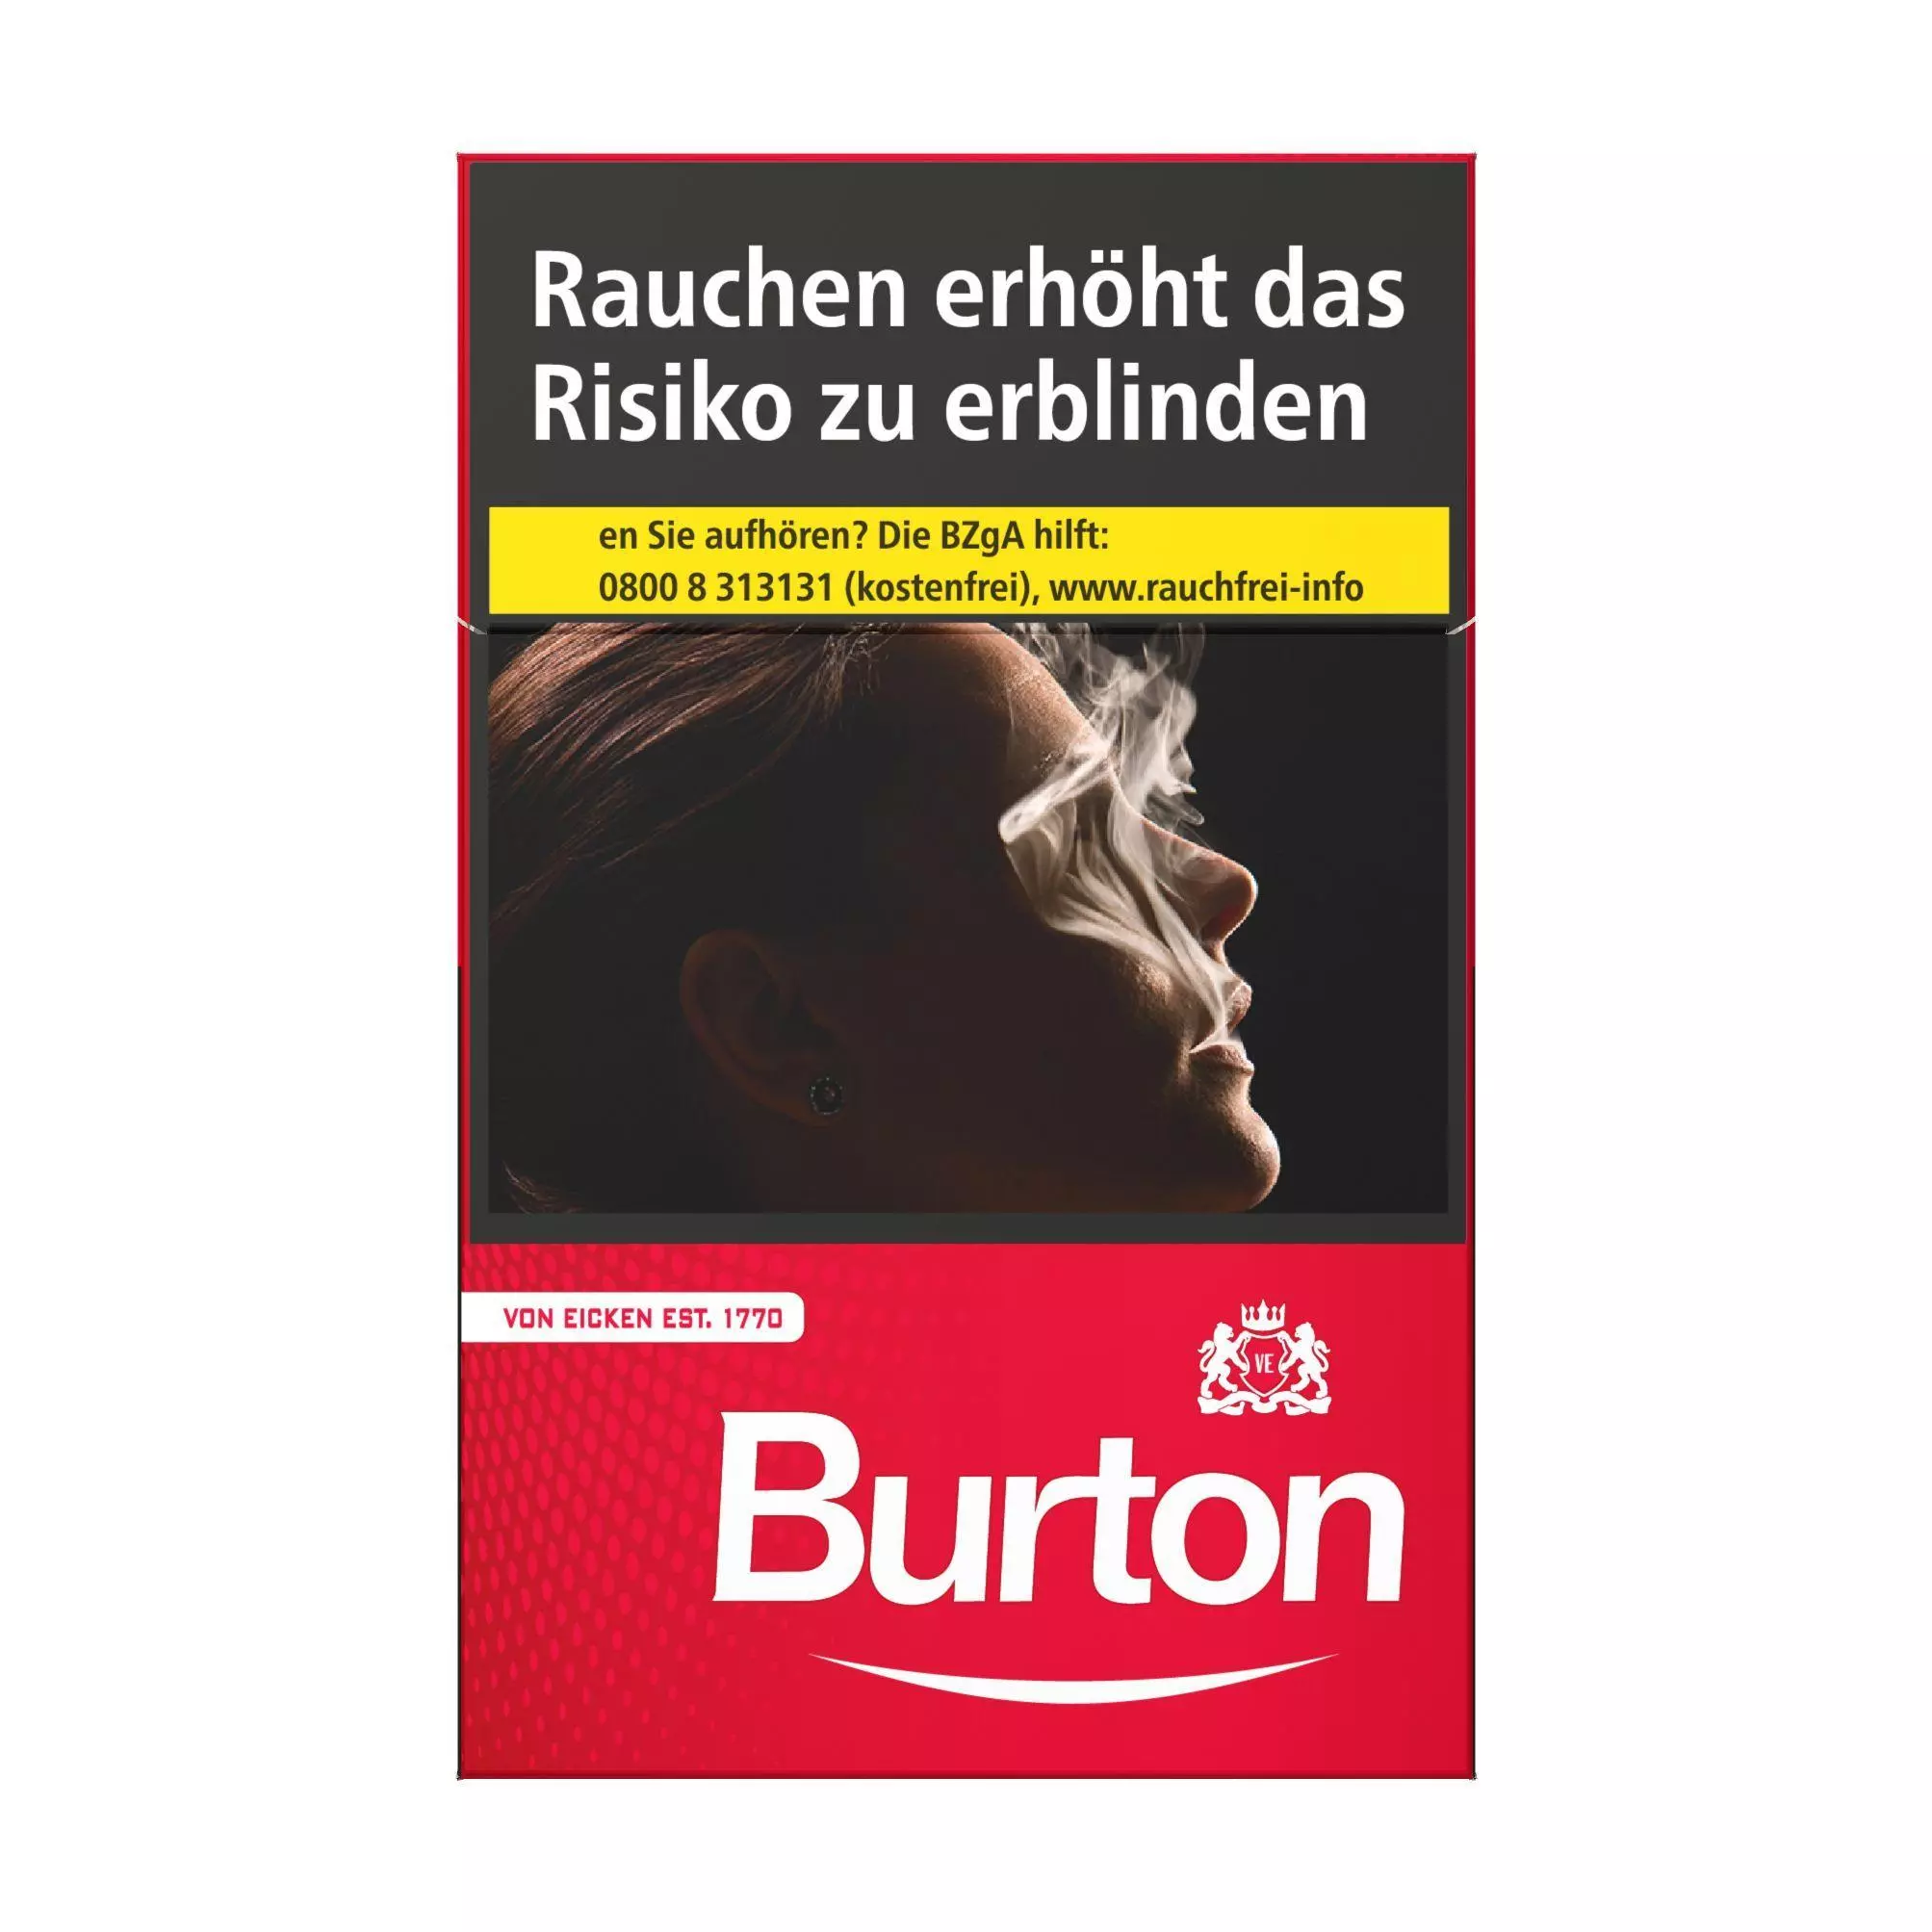 Burton Original L 10 x 20 Zigaretten